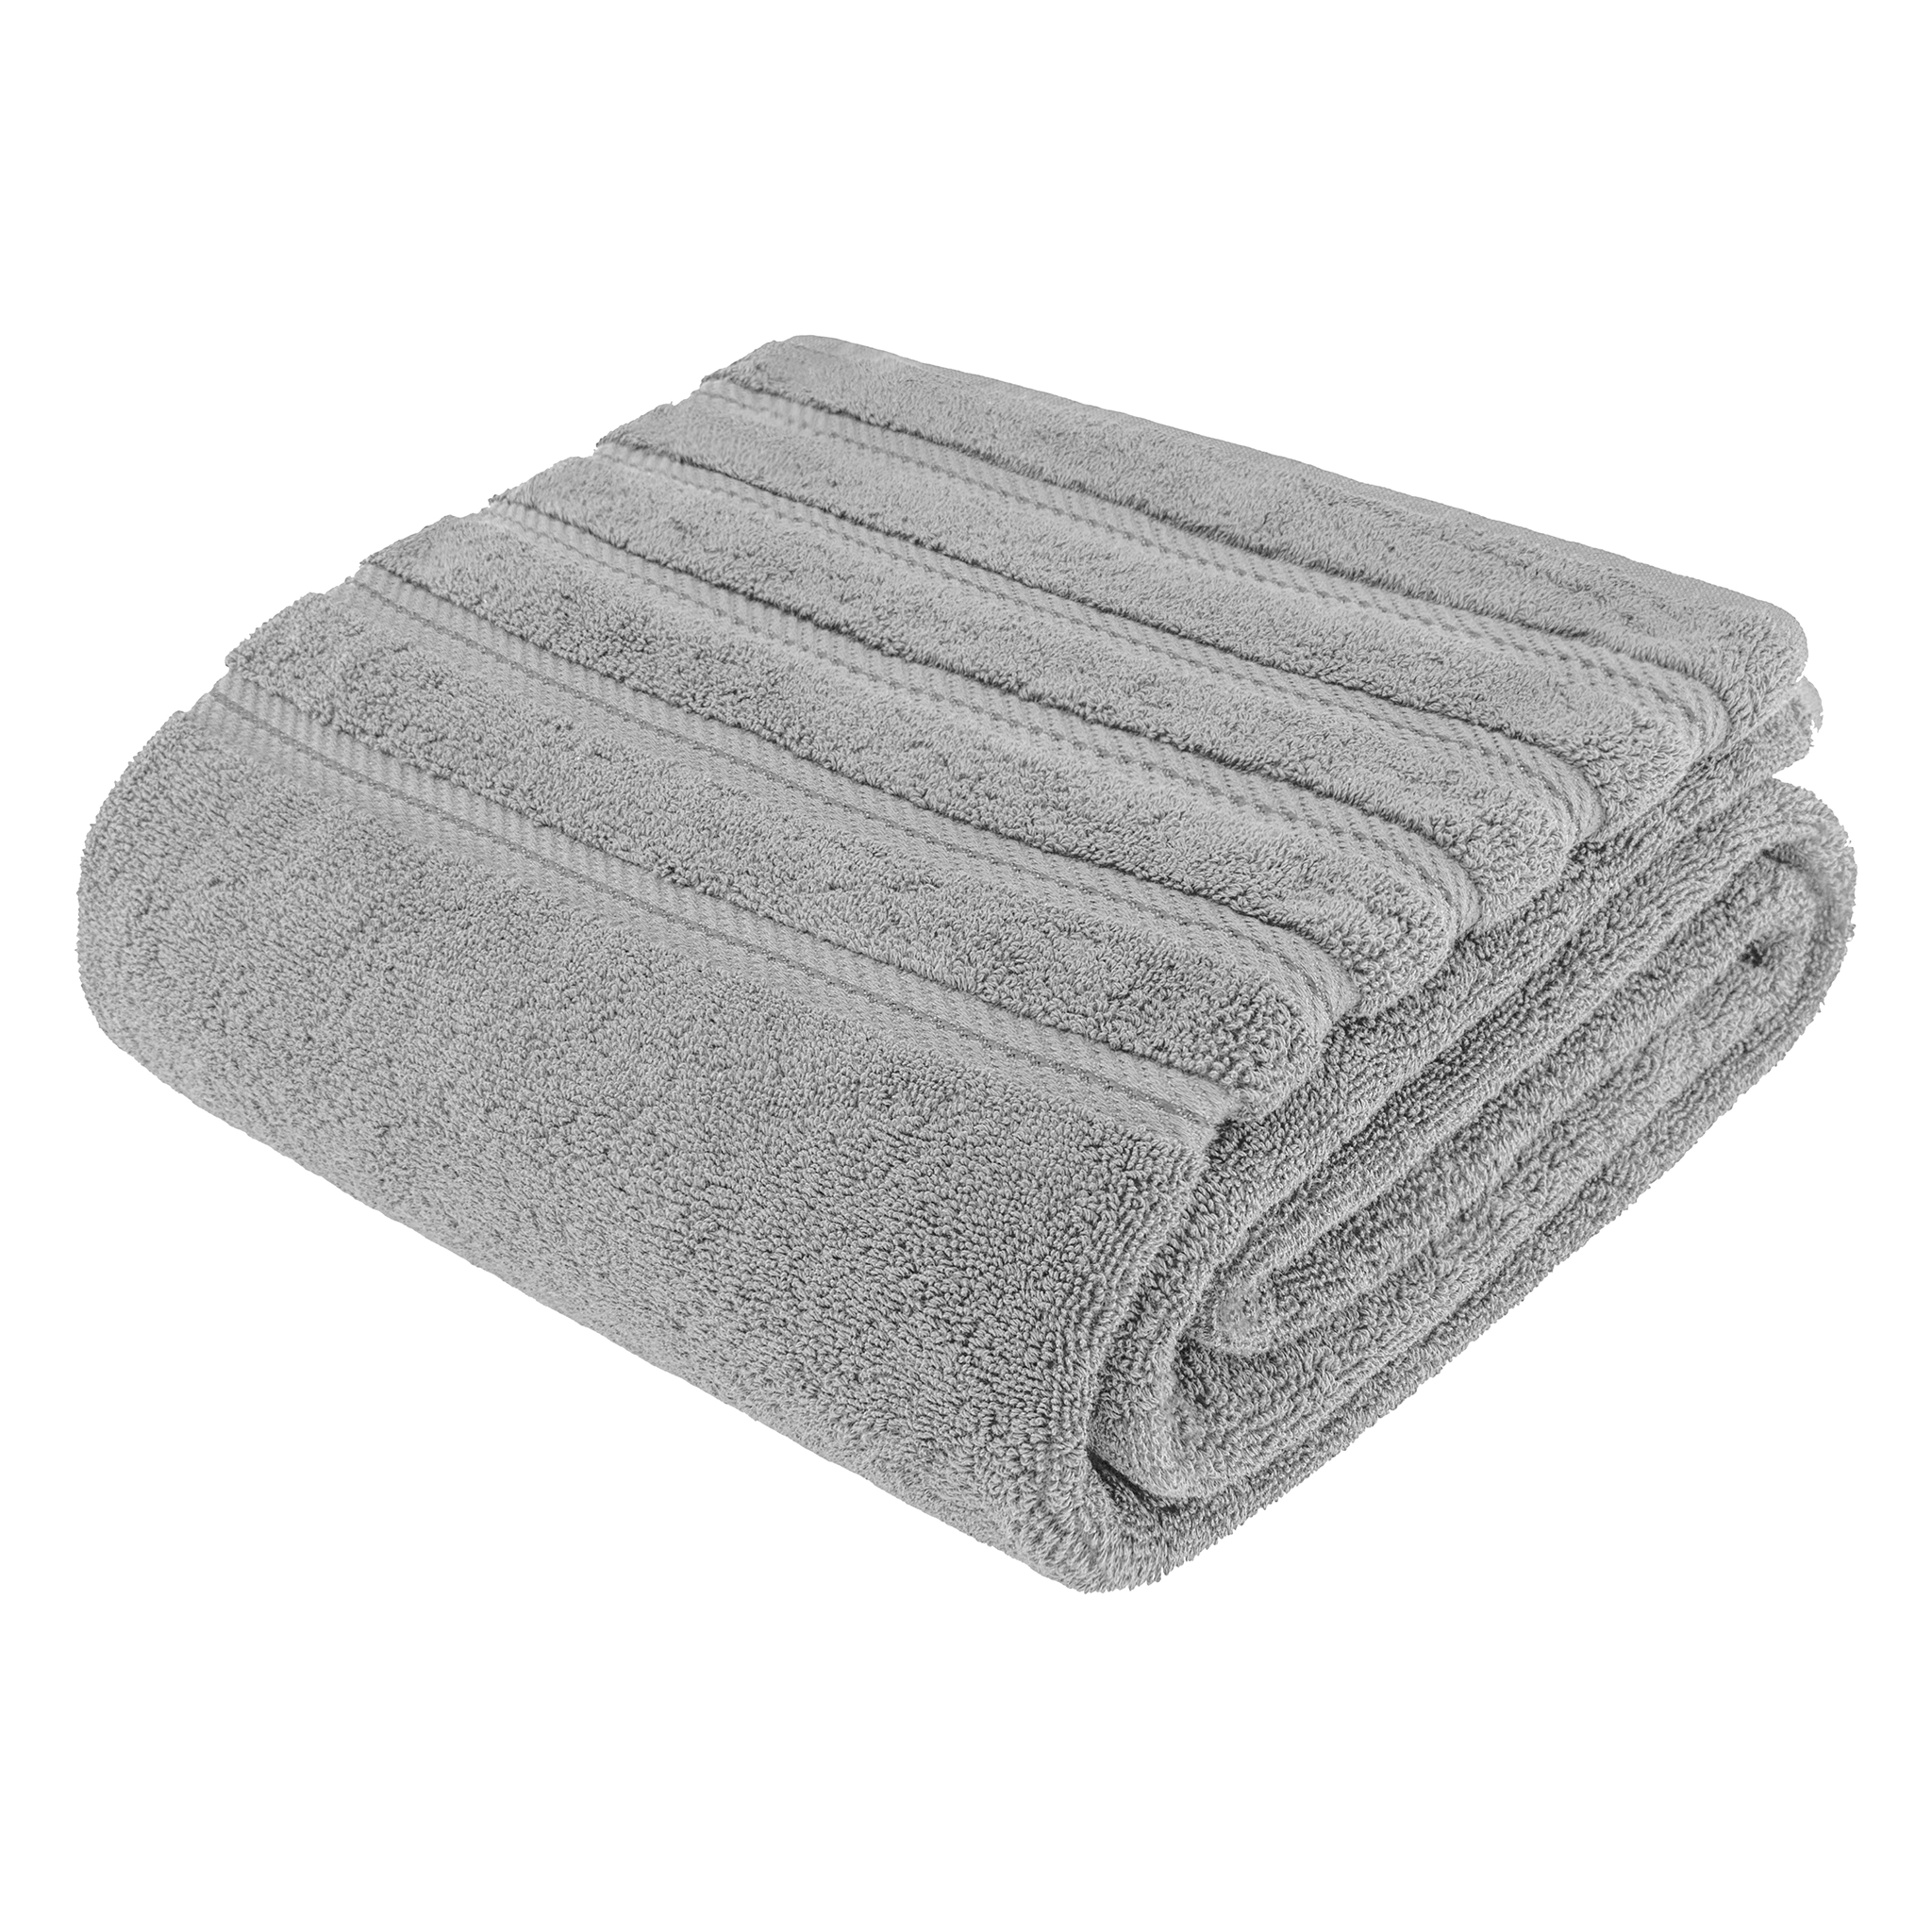 American Soft Linen - 35x70 Jumbo Bath Sheet Turkish Bath Towel - 16 Piece Case Pack - Rockridge-Gray - 7